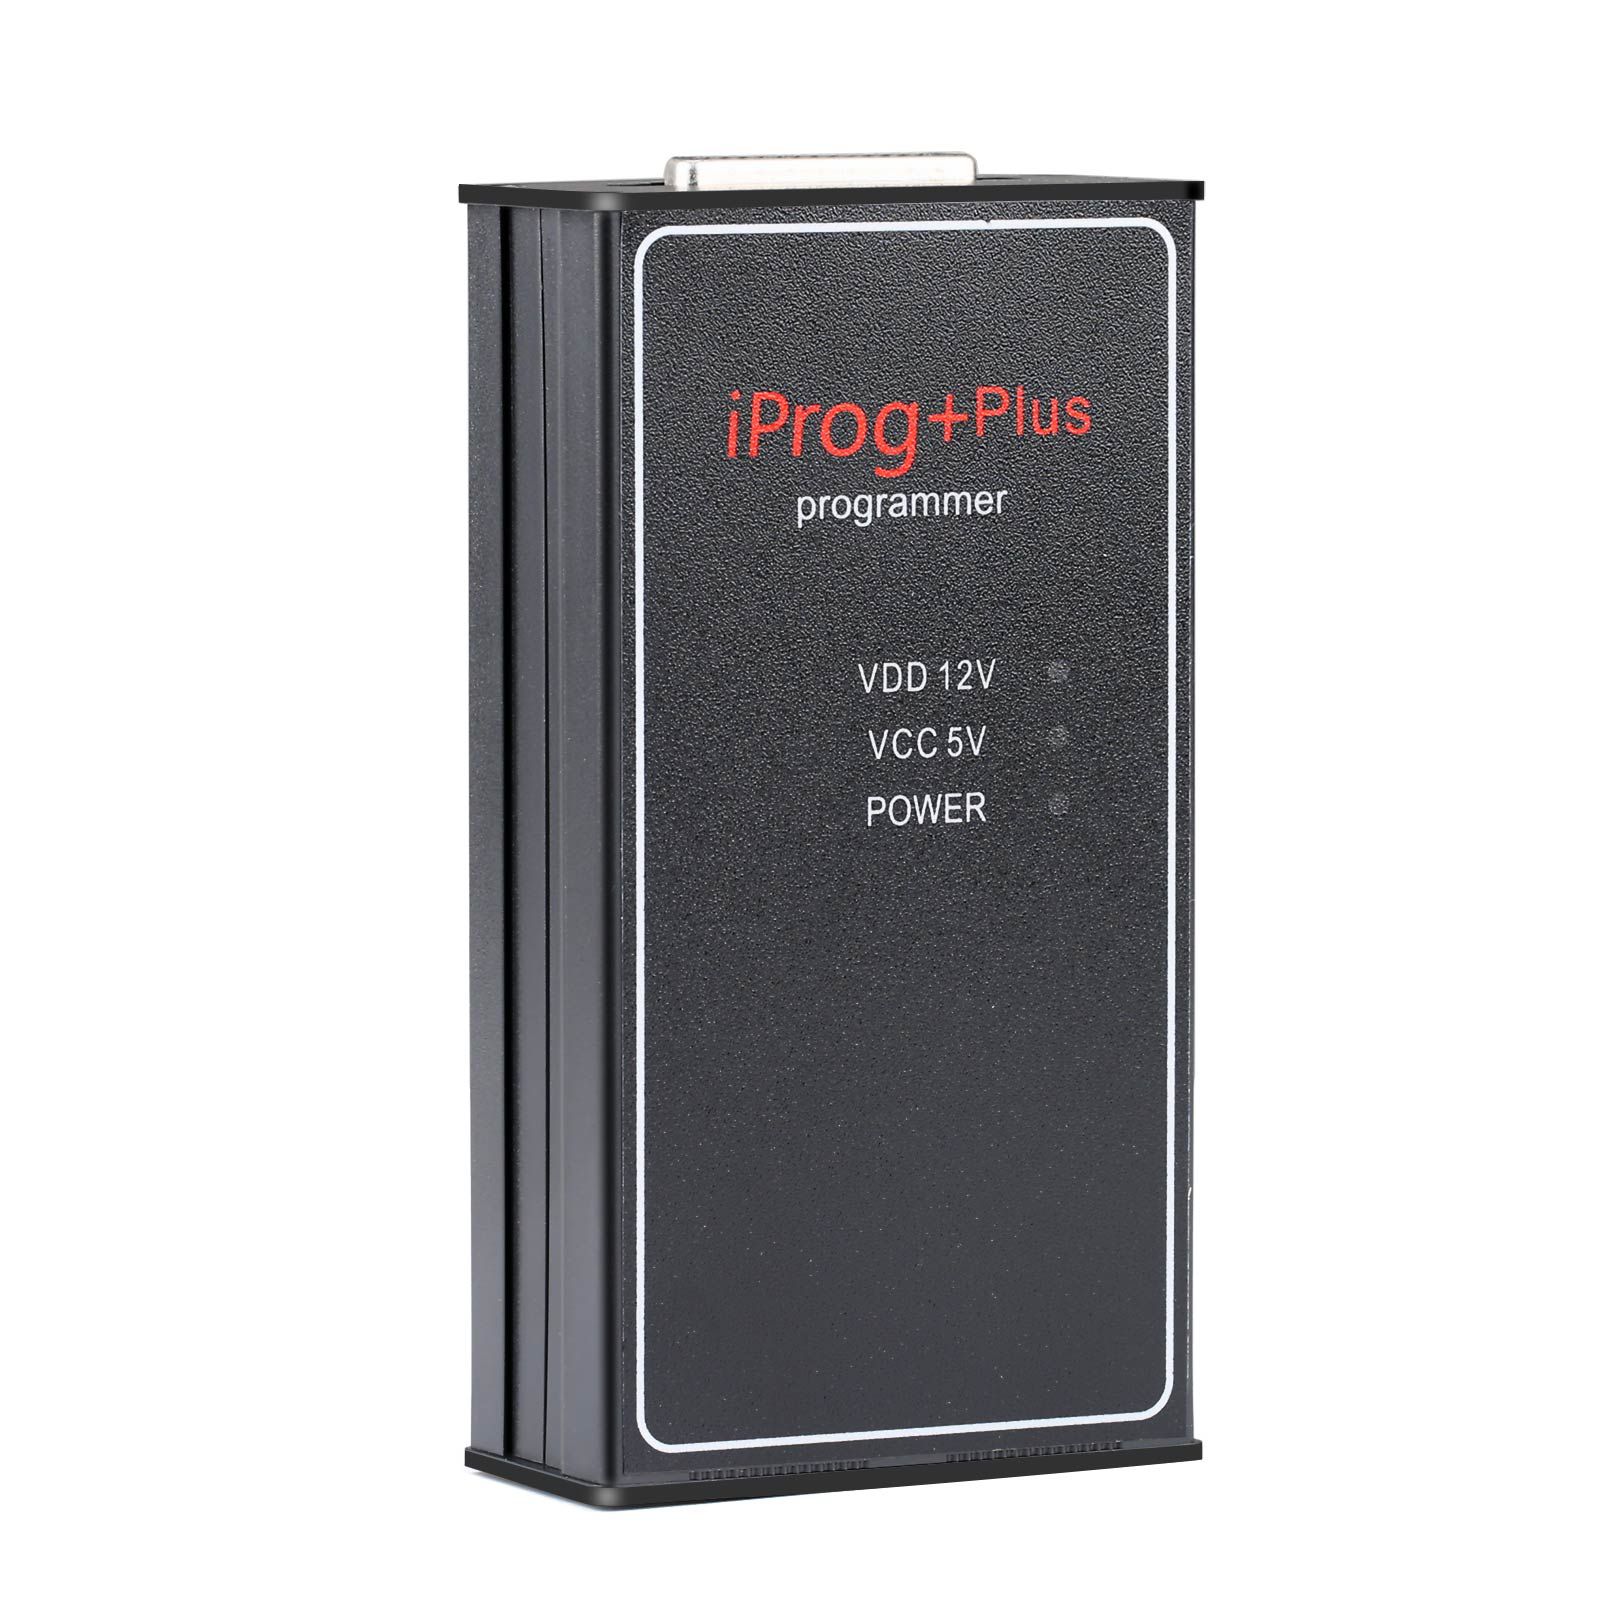 V87 Iprog+ Plus Pro Programmer Full Configuration Support IMMO + Mileage Correction + Airbag Reset